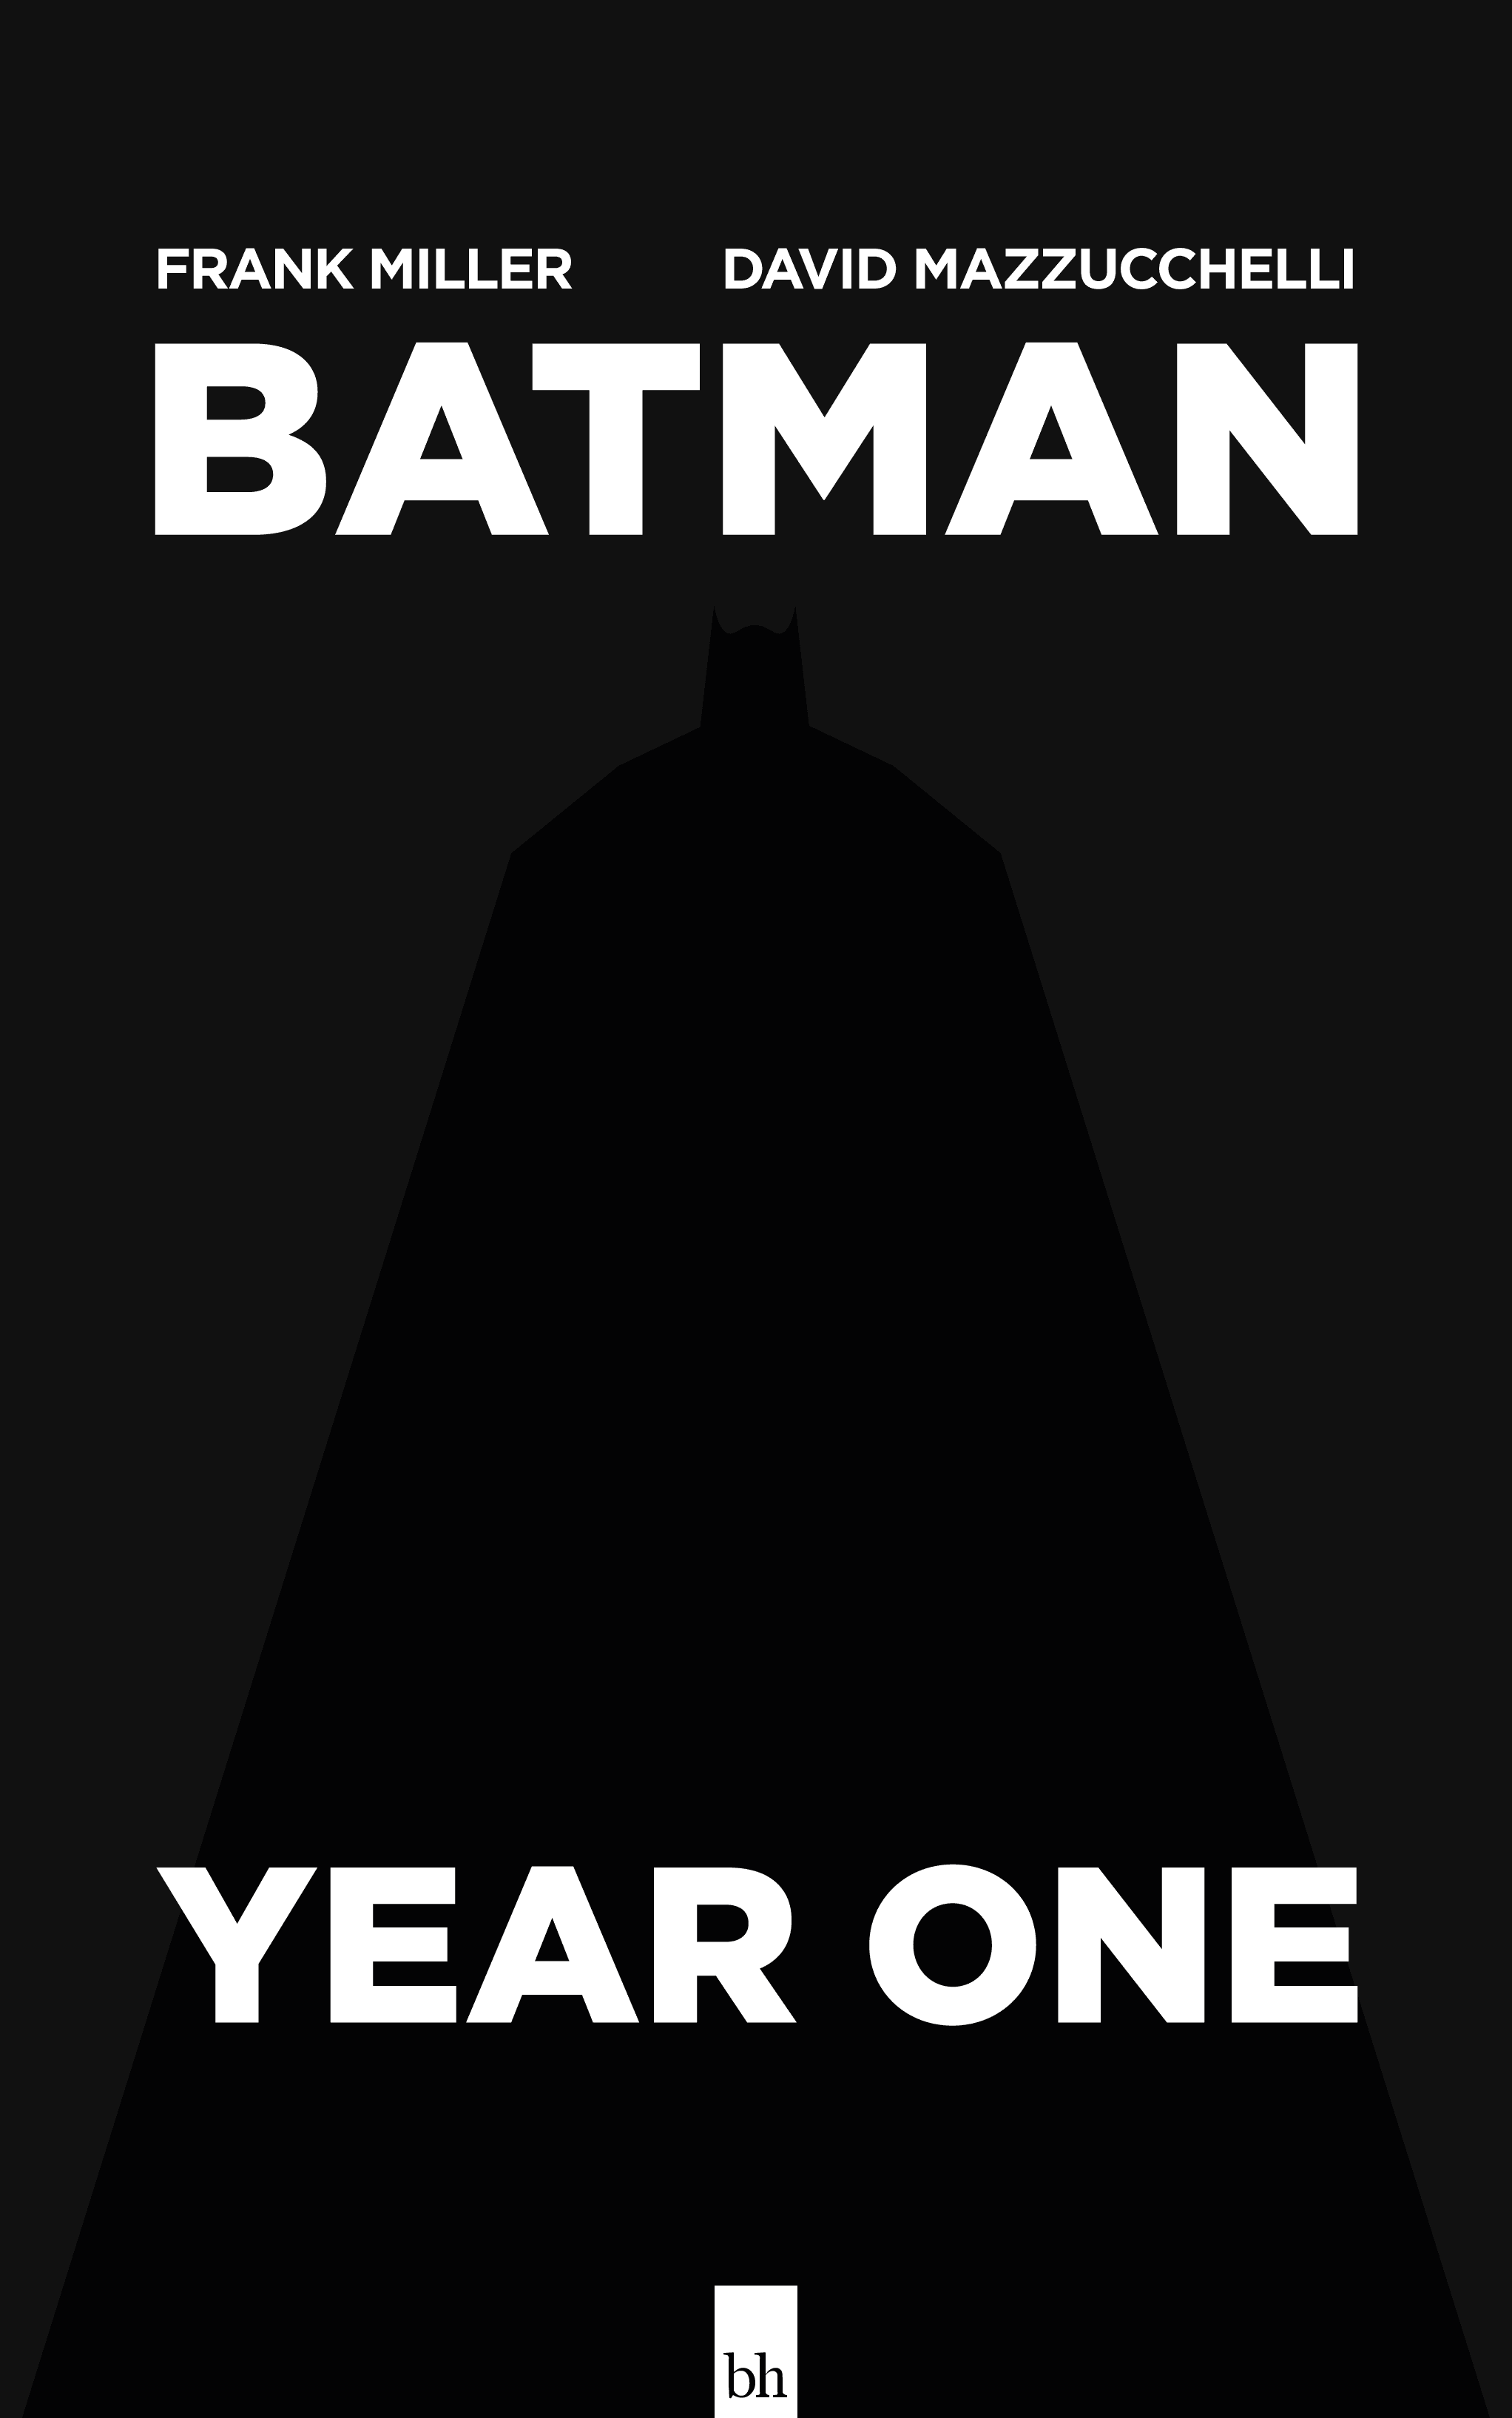 Batman Year One by Frank Miller